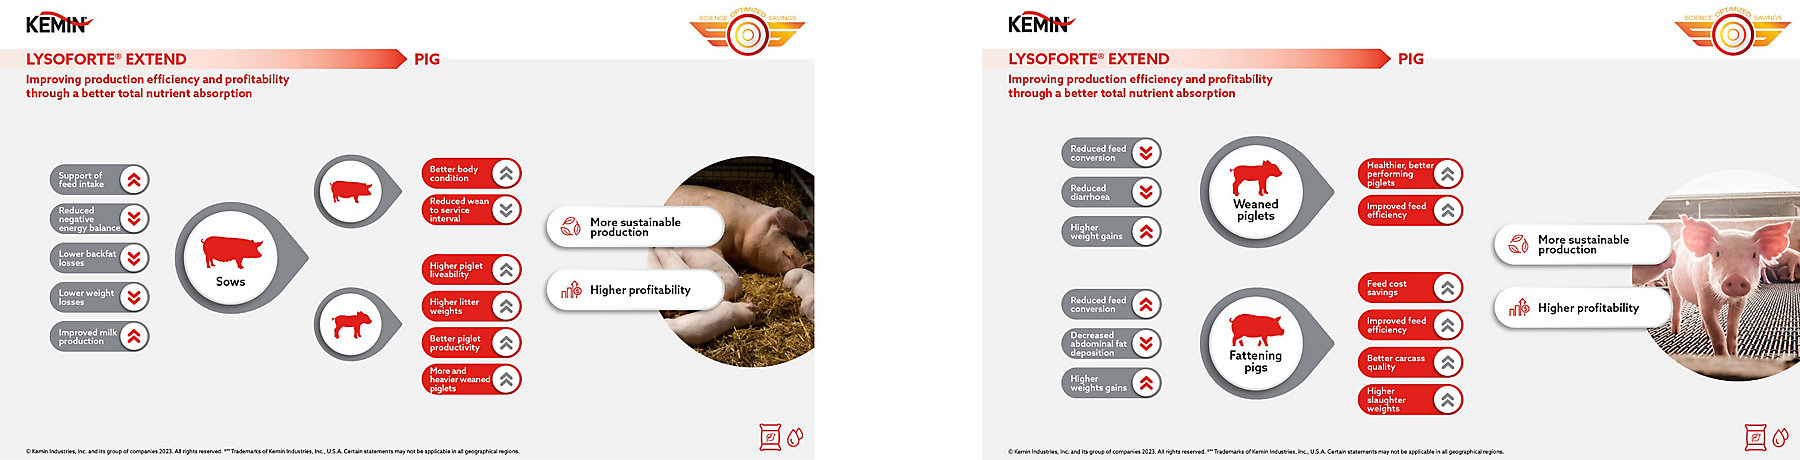 Kemin - infographic LEX 01 - 01-02-2023